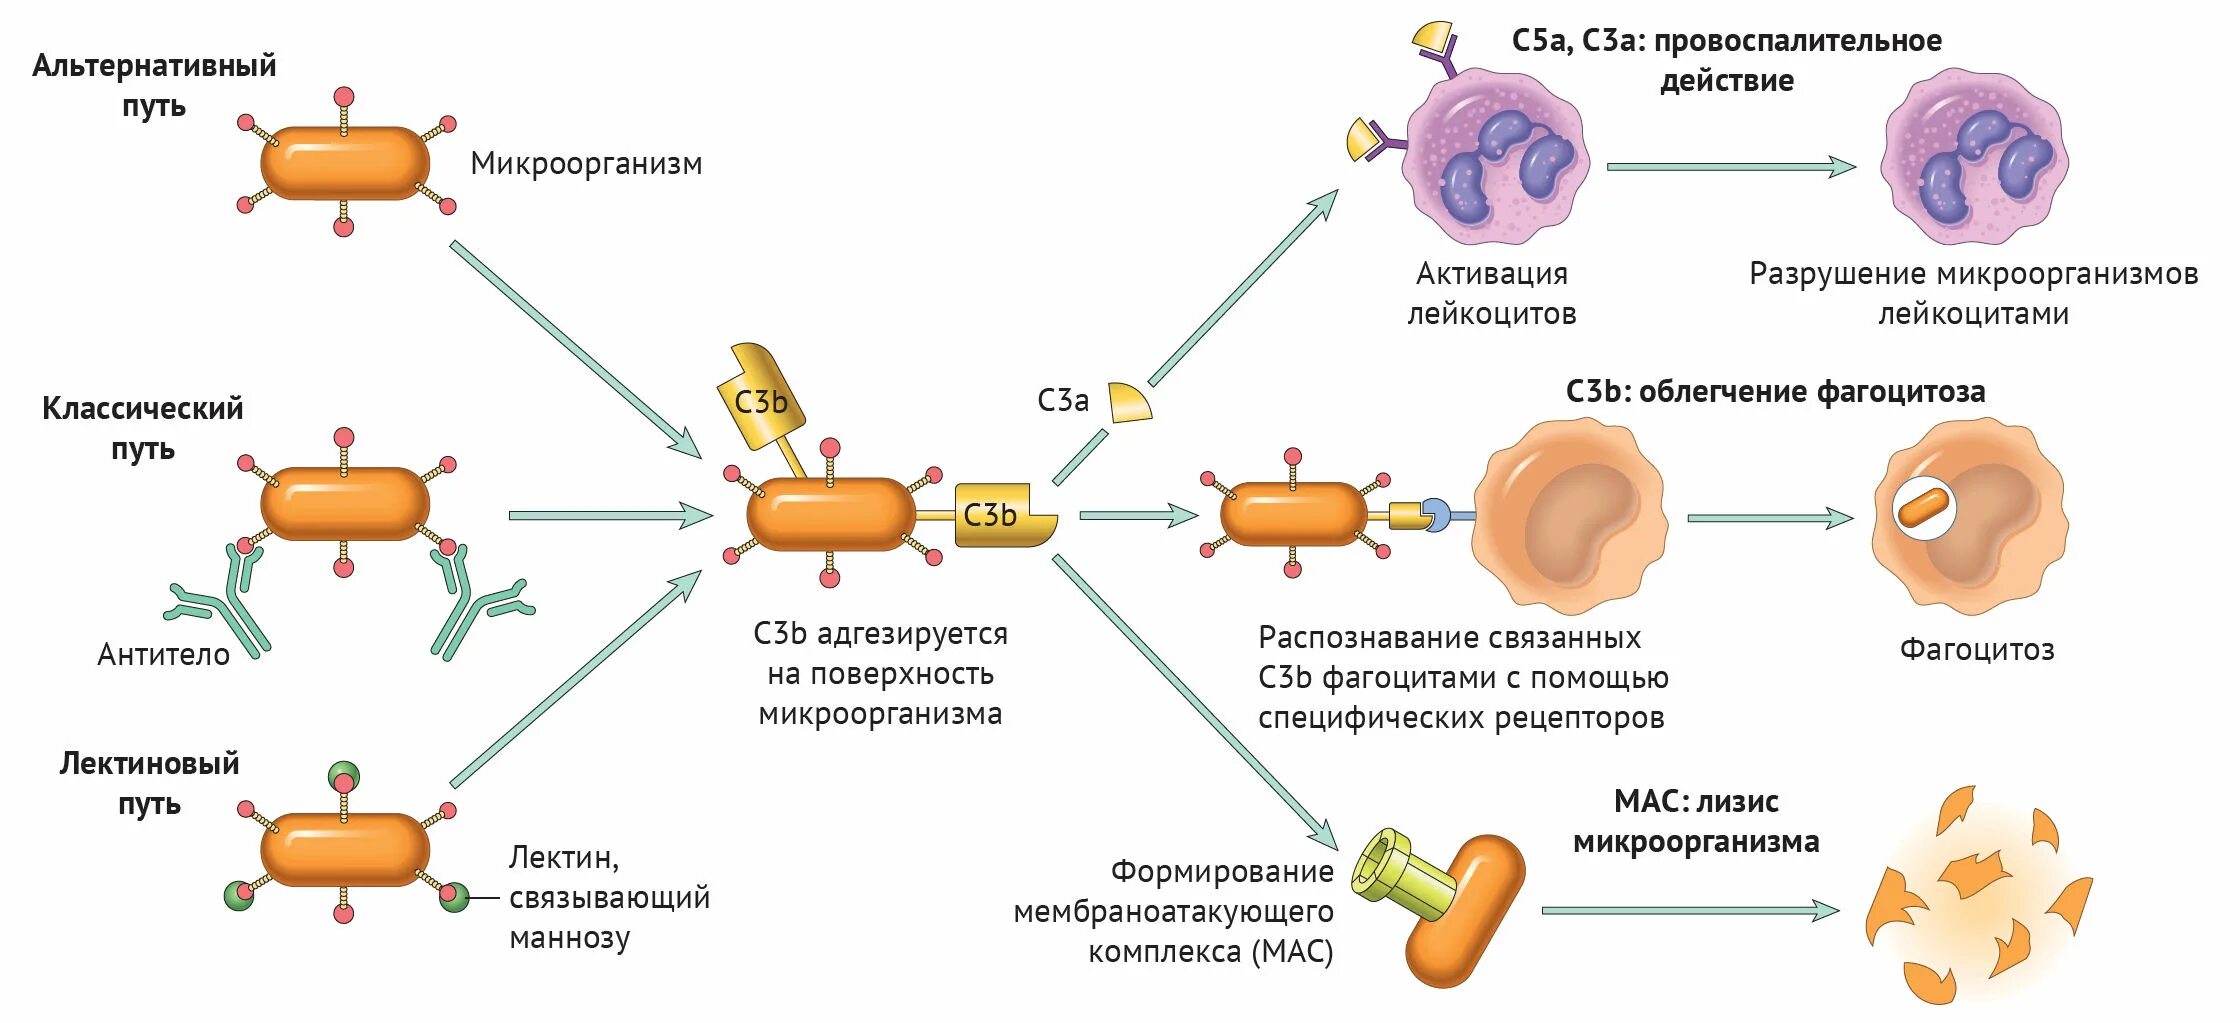 Комплекс комплемента. Активация системы комплемента с3. Функции белков системы комплемента иммунология. Цитолитическая функция системы комплемента. Функции иммунного комплемента.